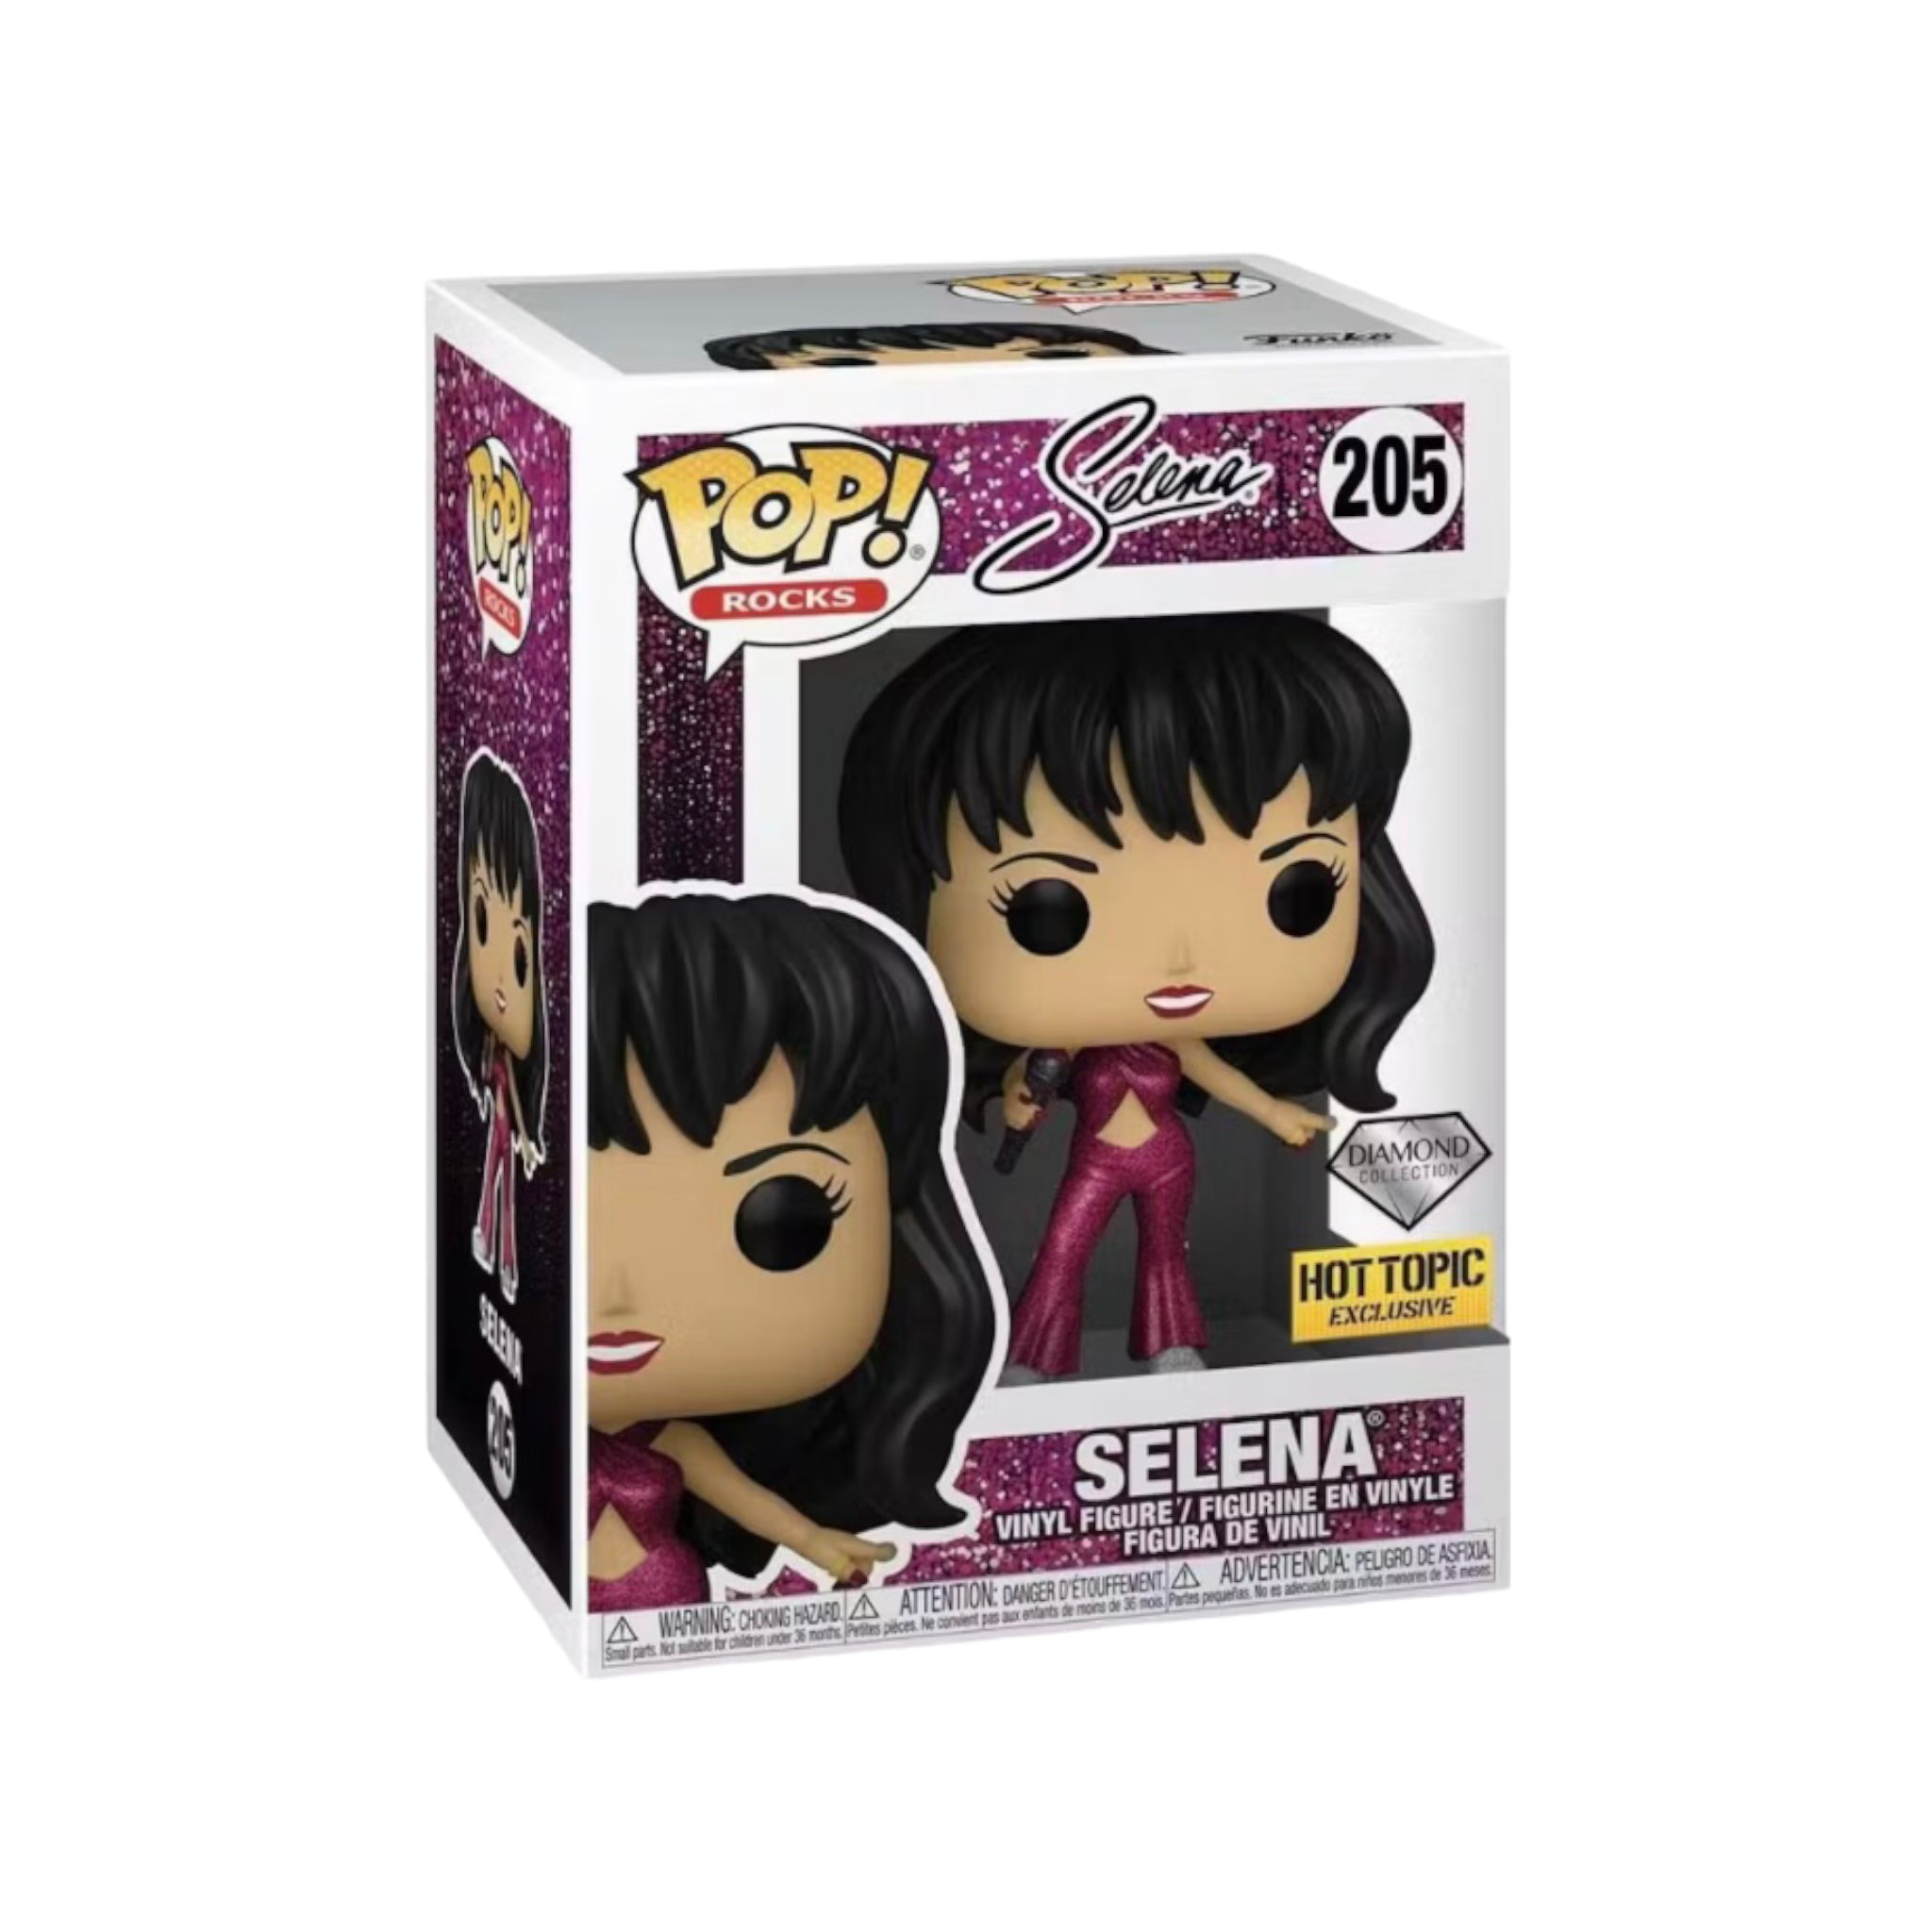 Selena #205 (Diamond Collection) Funko Pop! - Rocks - Hot Topic Exclusive